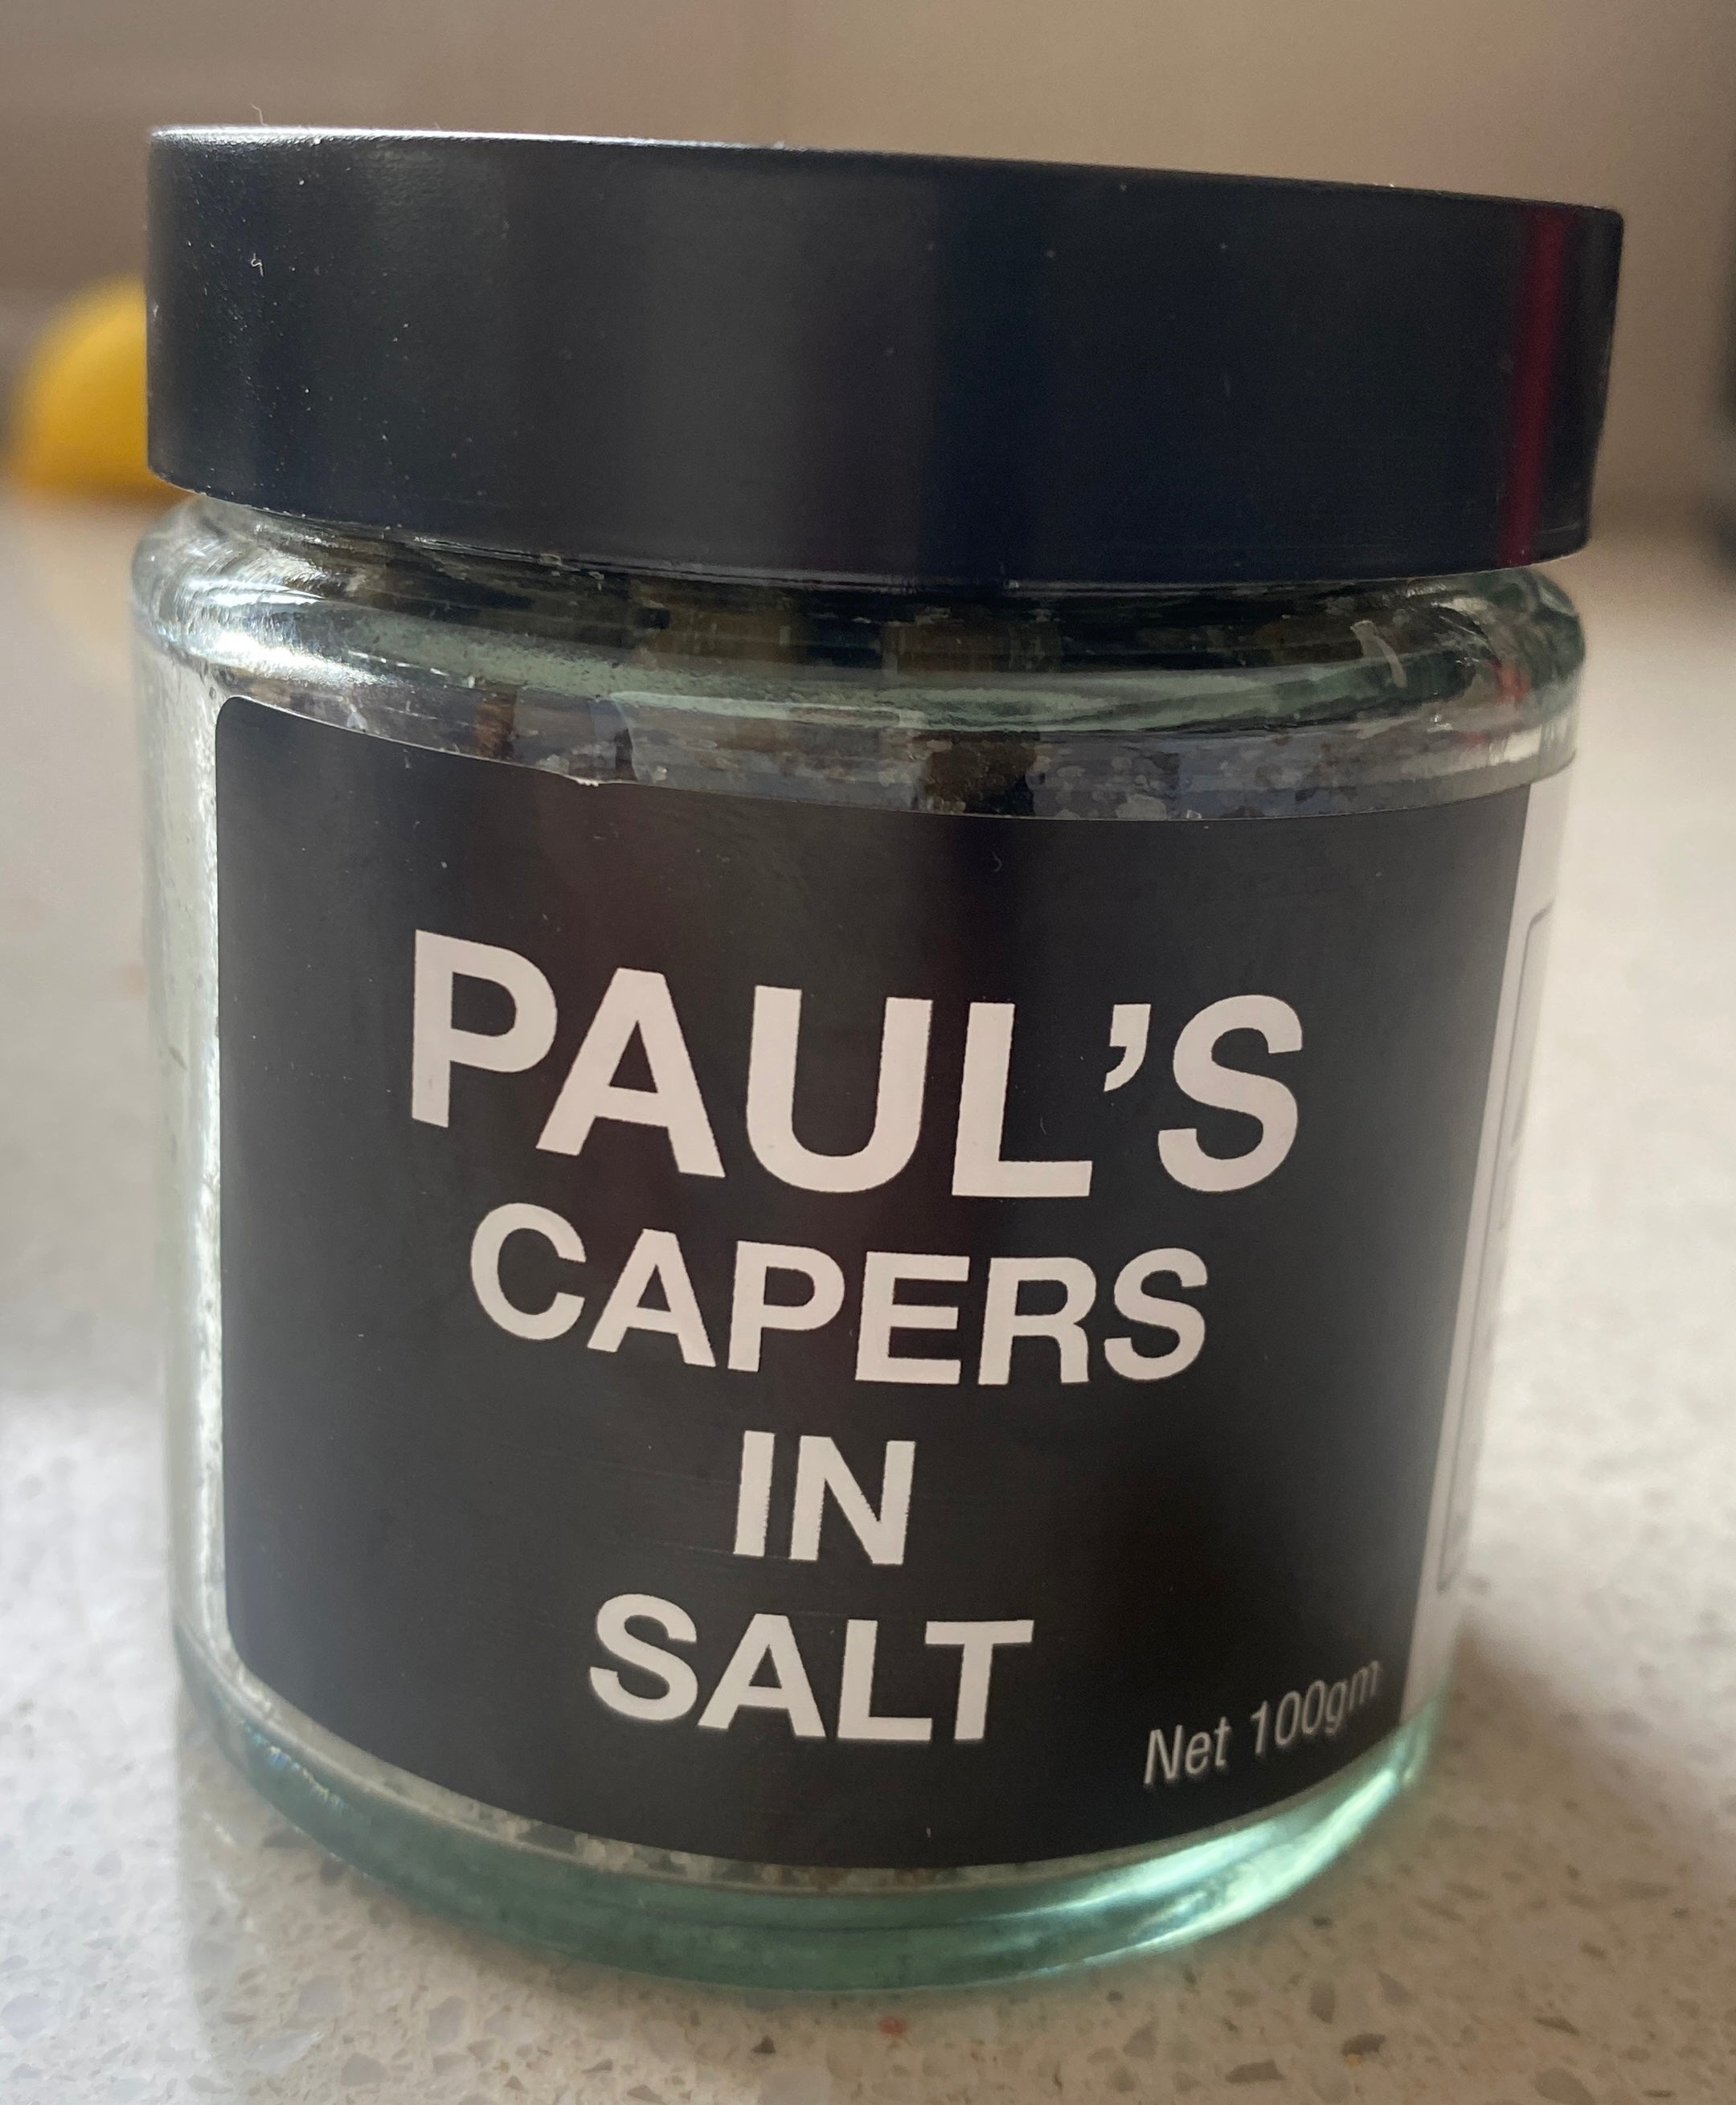 Paul’s Capers in Salt